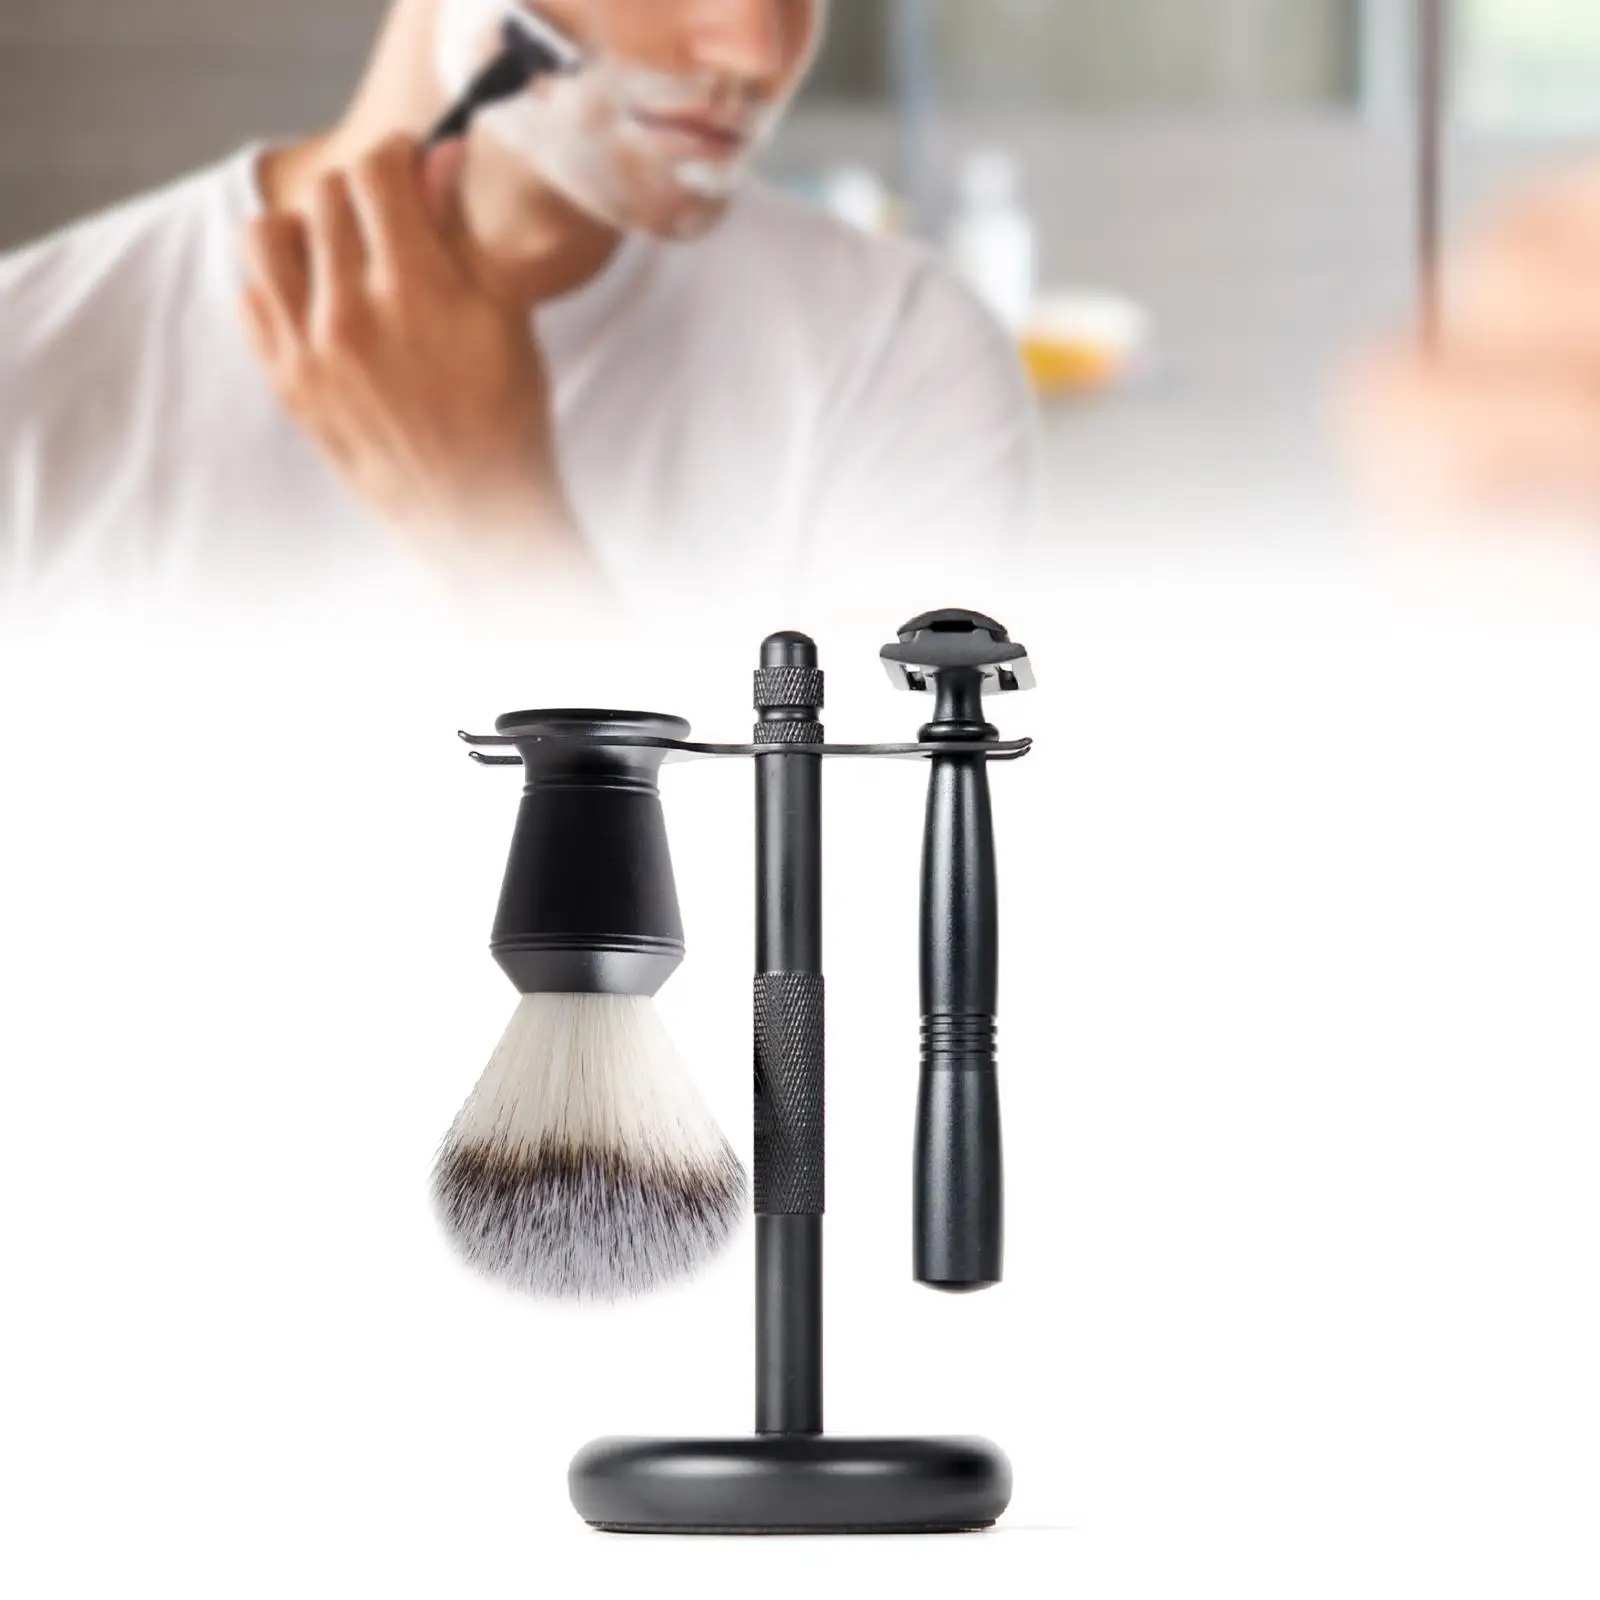 3x Shaving Set Black Color Double Edge Safety Razor Shaving Cleaning Tool Razor+ Stand Holder + Shaving Brush Luxury Gift Set